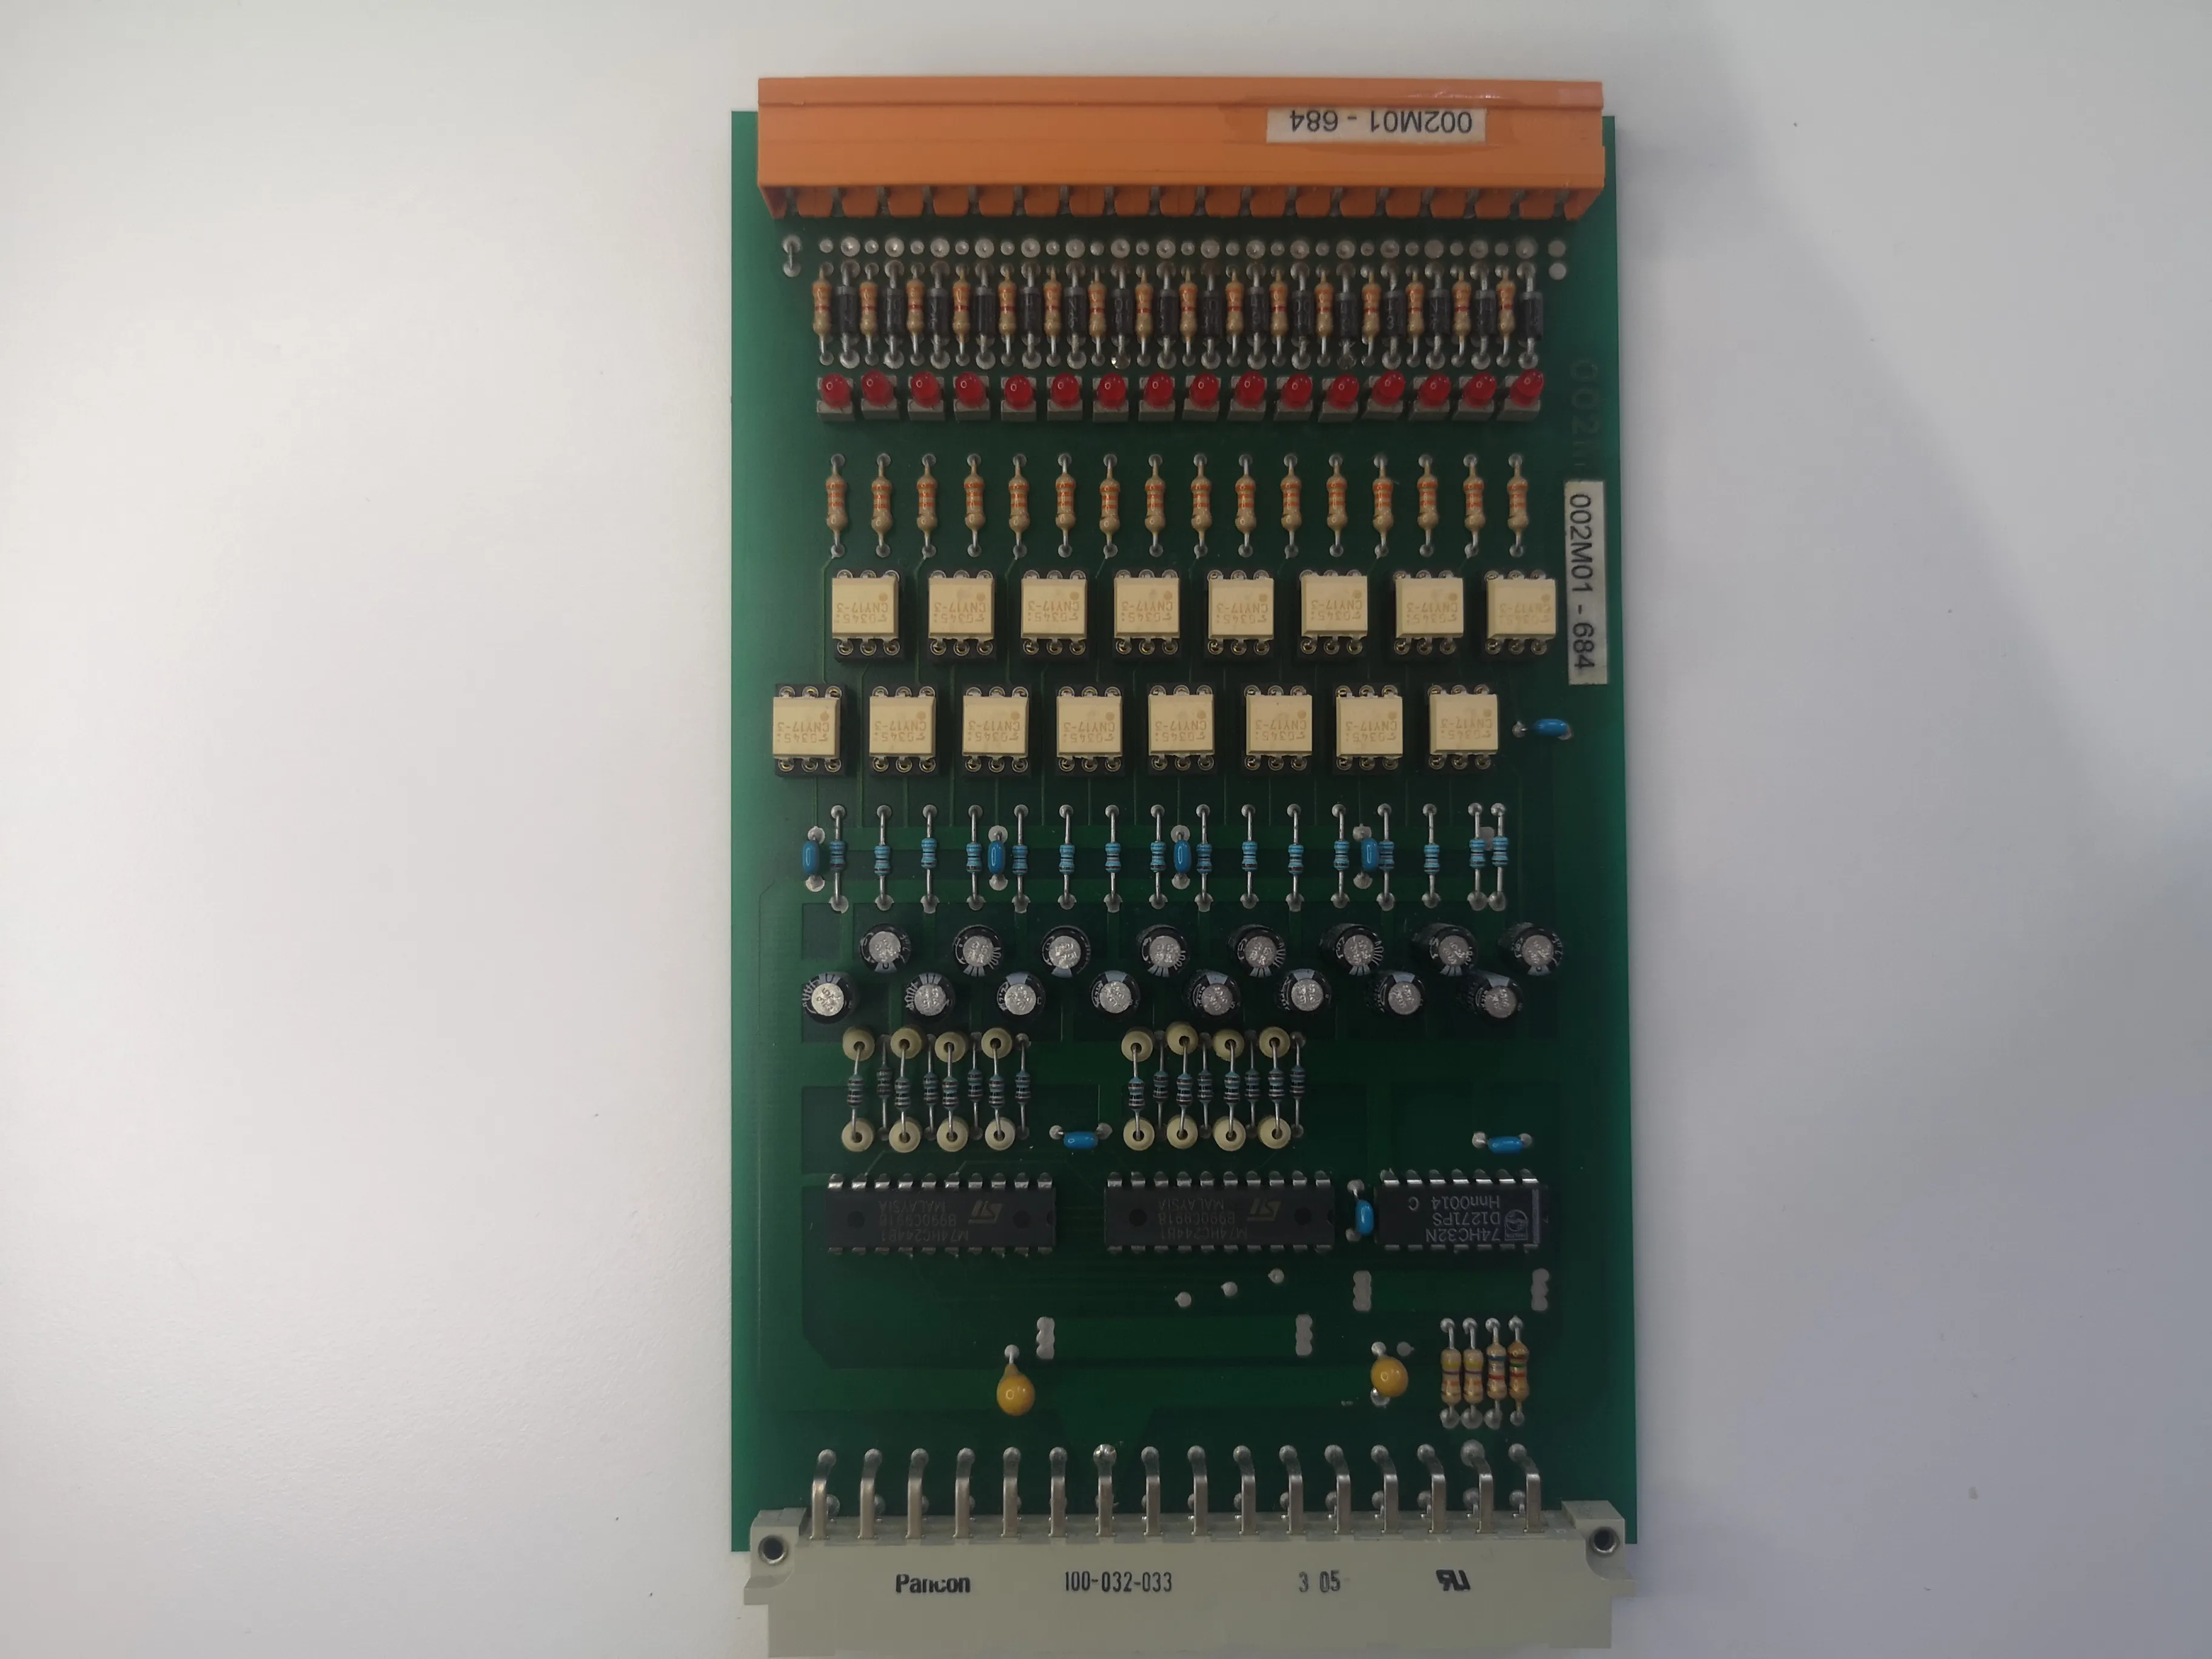 Image of the optocoupler board